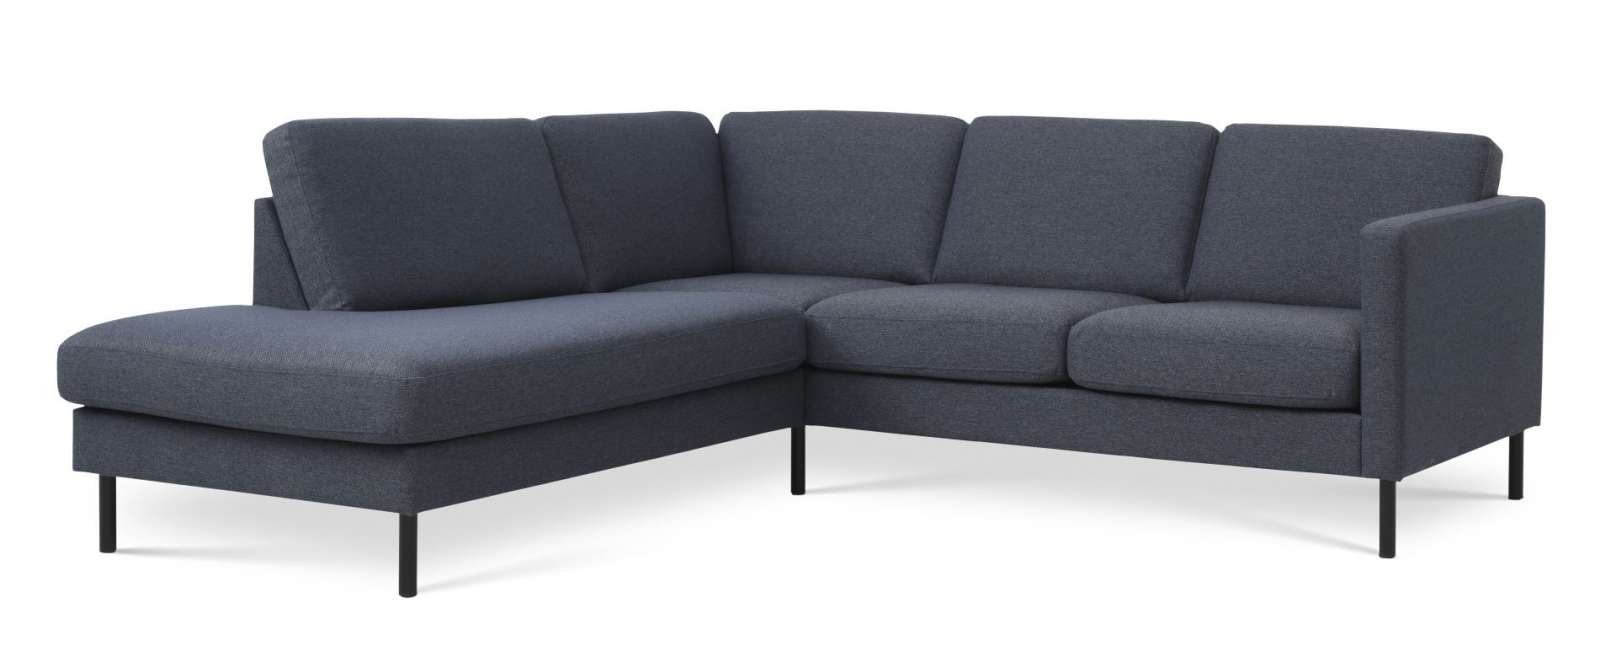 Priser på Ask sæt 52 lille OE sofa, m. venstre chaiselong - navy blå polyester stof og sort metal